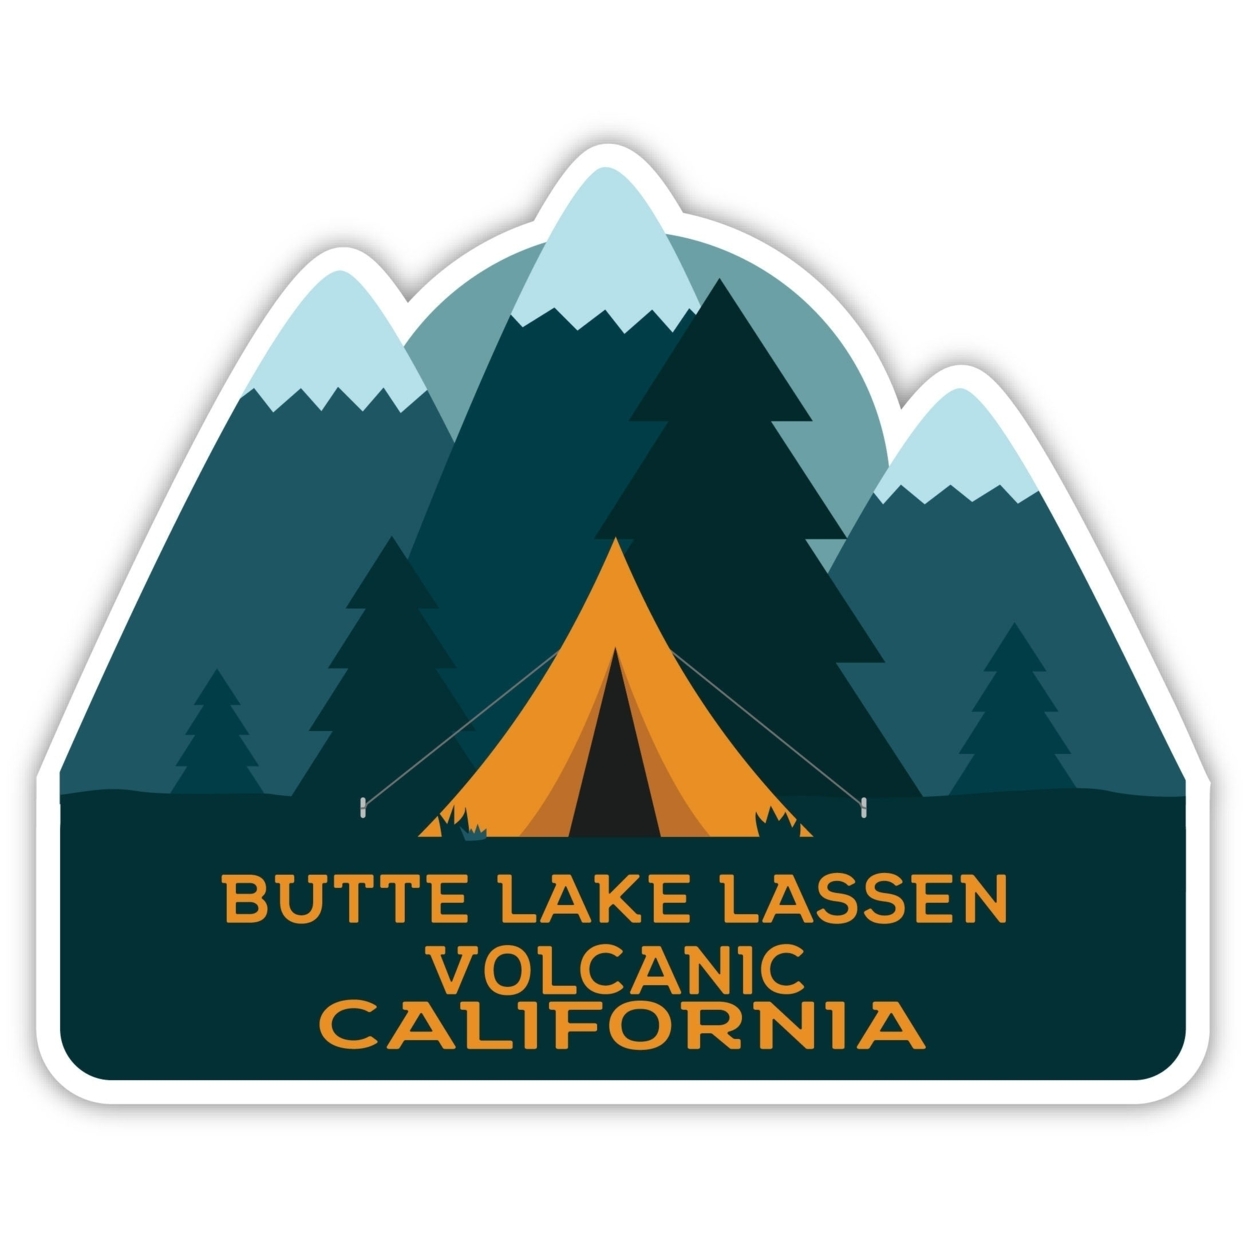 Butte Lake Lassen Volcanic California Souvenir Decorative Stickers (Choose Theme And Size) - 4-Pack, 10-Inch, Tent